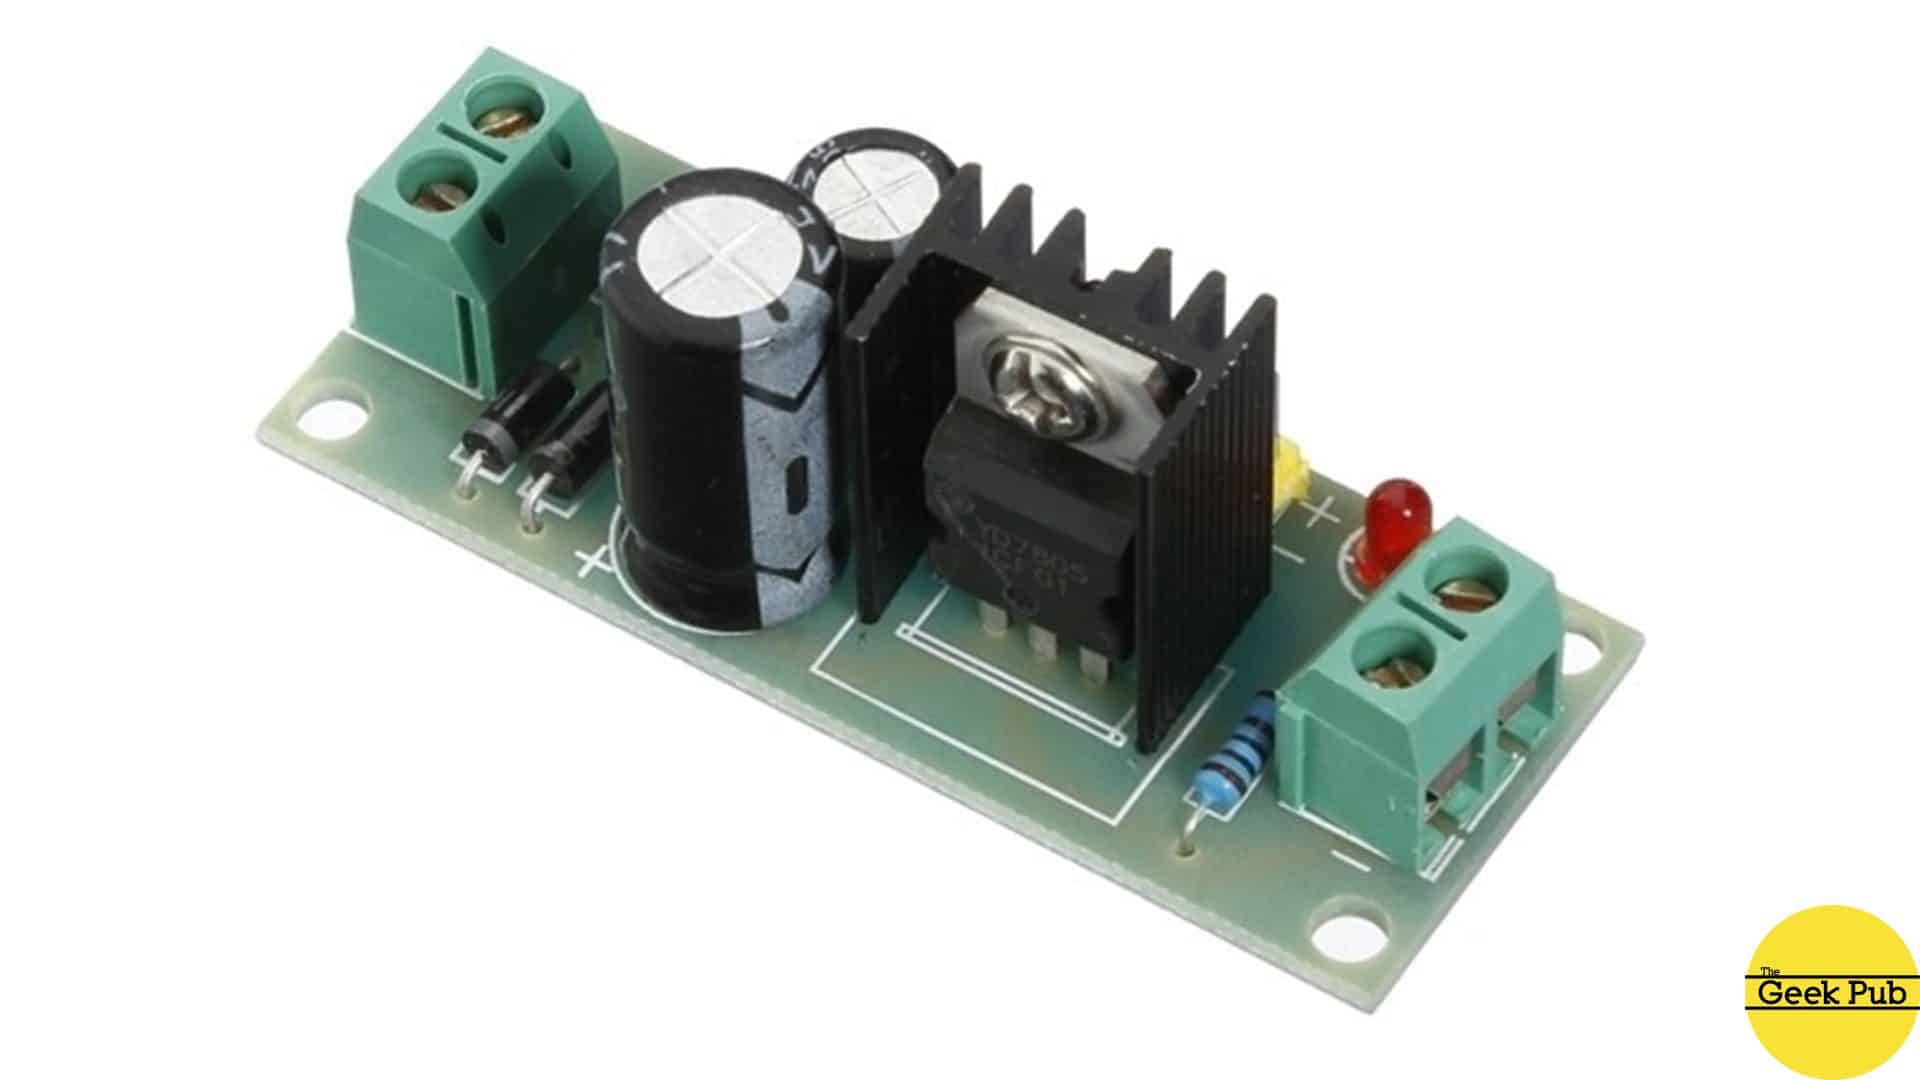 LM7805 voltage regulator with heatsink